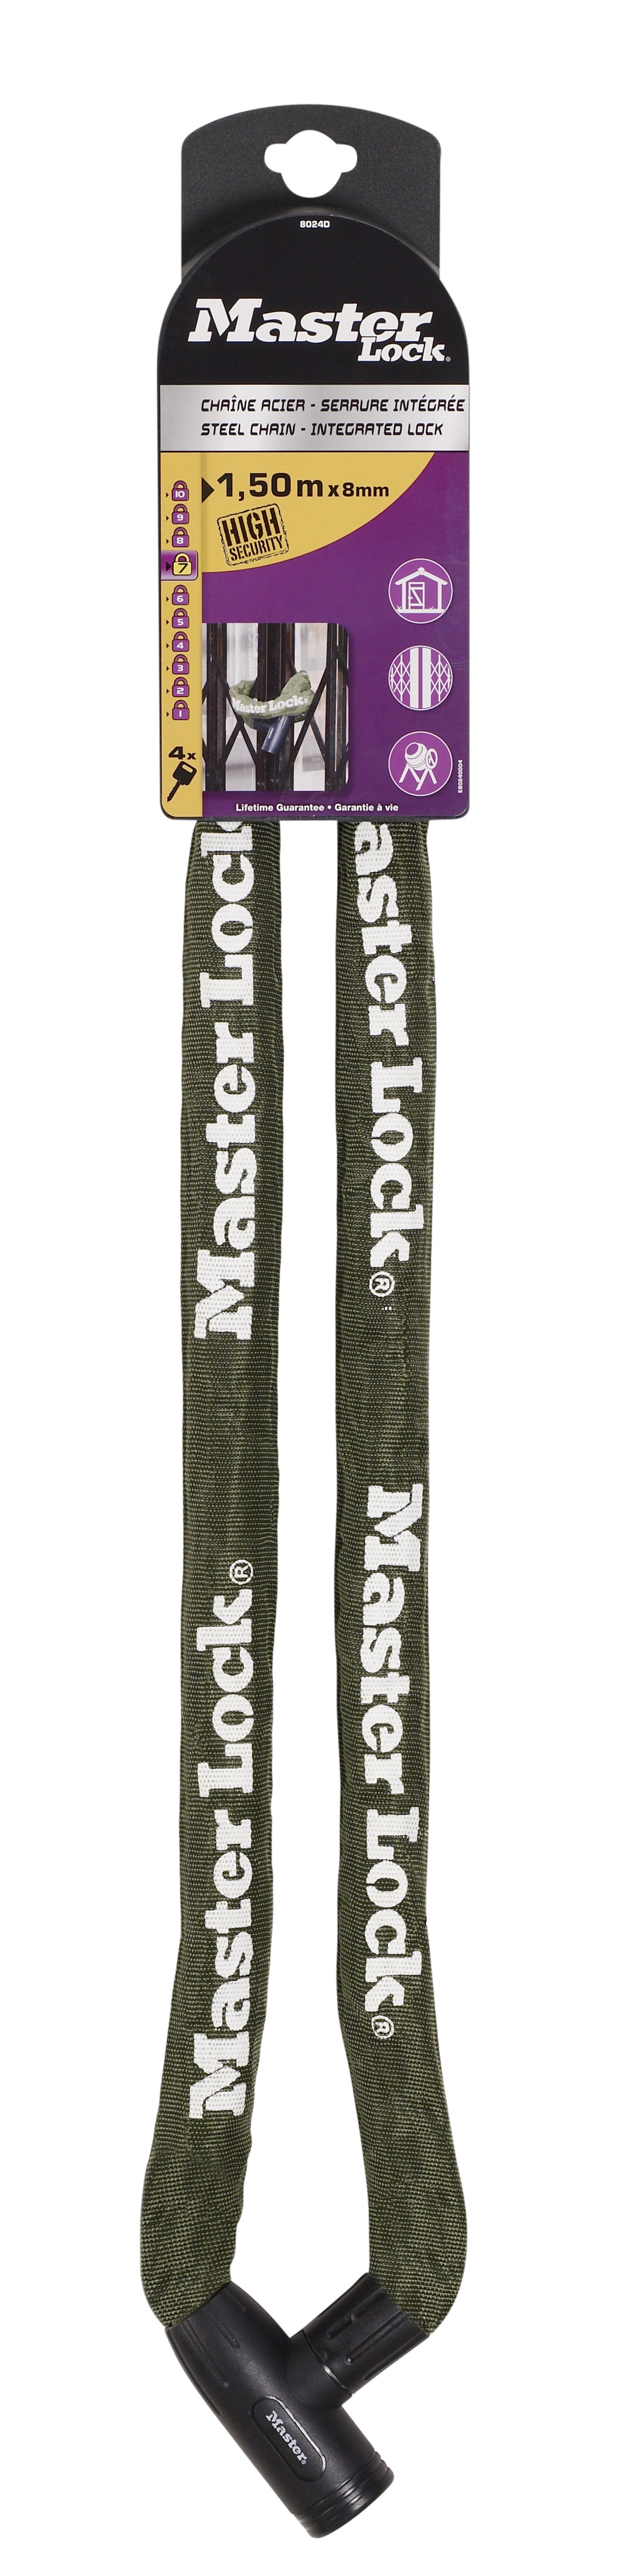 Masterlock 8017EURD Chain 1.5 m x 8 mm 